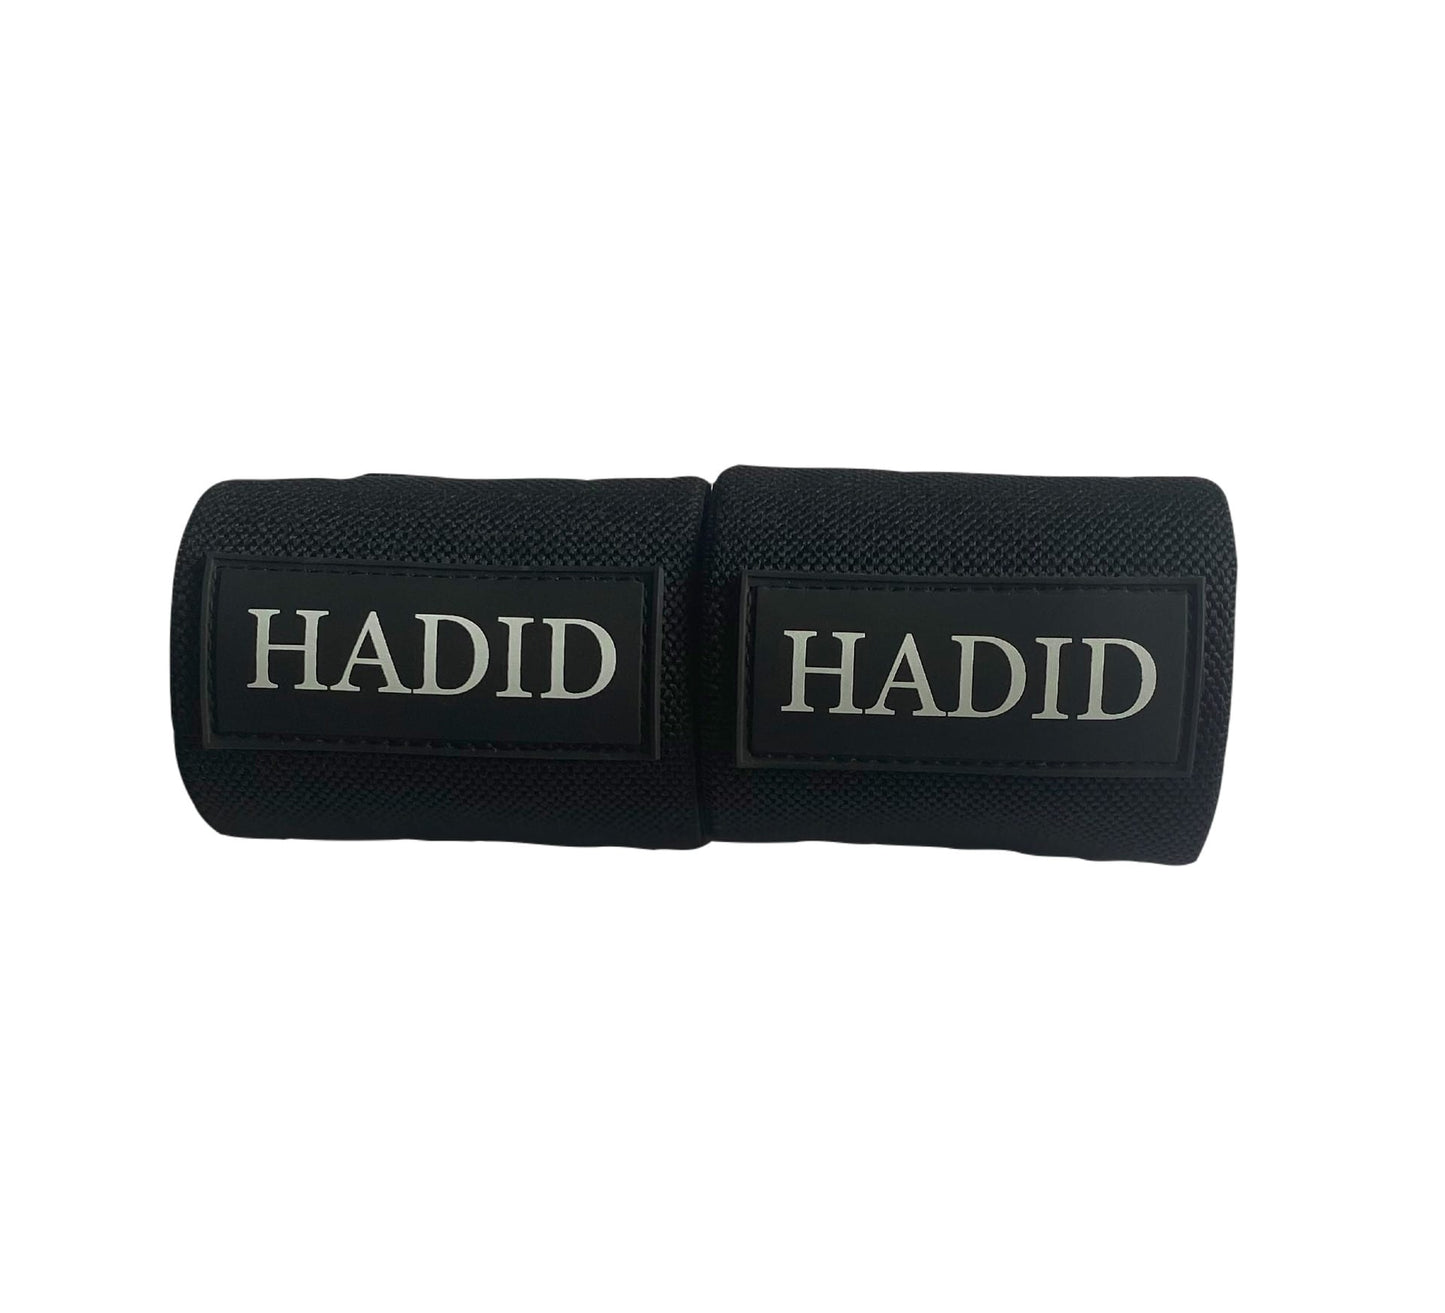 Hadid Wrist Wraps Black Strapped